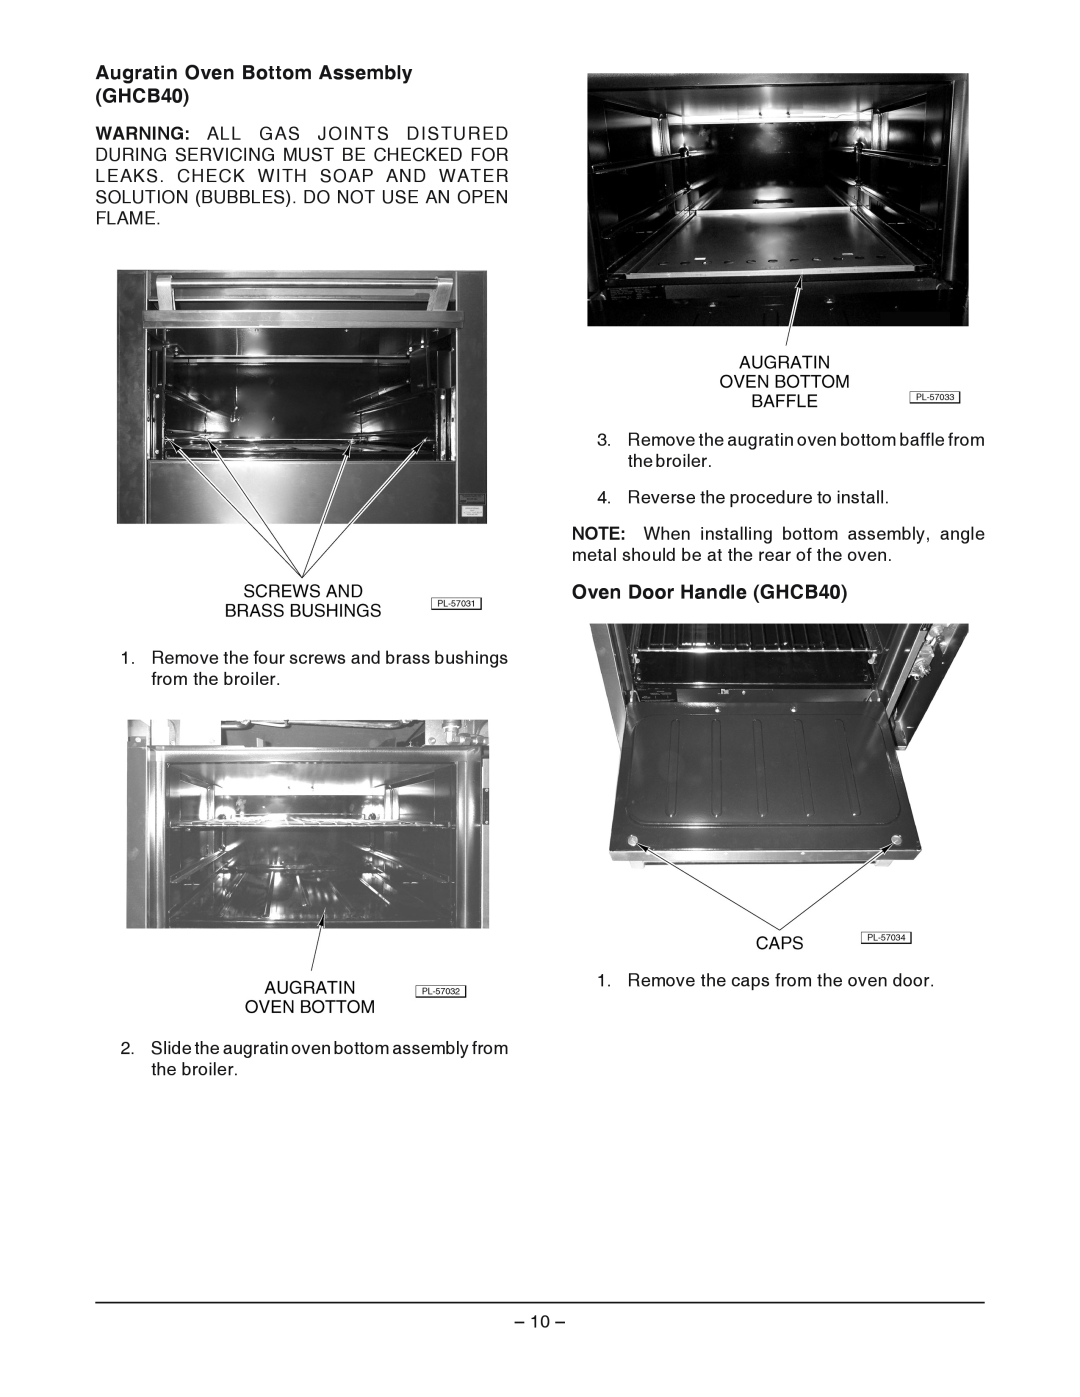 Vulcan-Hart HCB2(B), ML-052211, ML-052208, ML-052200, ML-052213 Augratin Oven Bottom Assembly GHCB40, Oven Door Handle GHCB40 